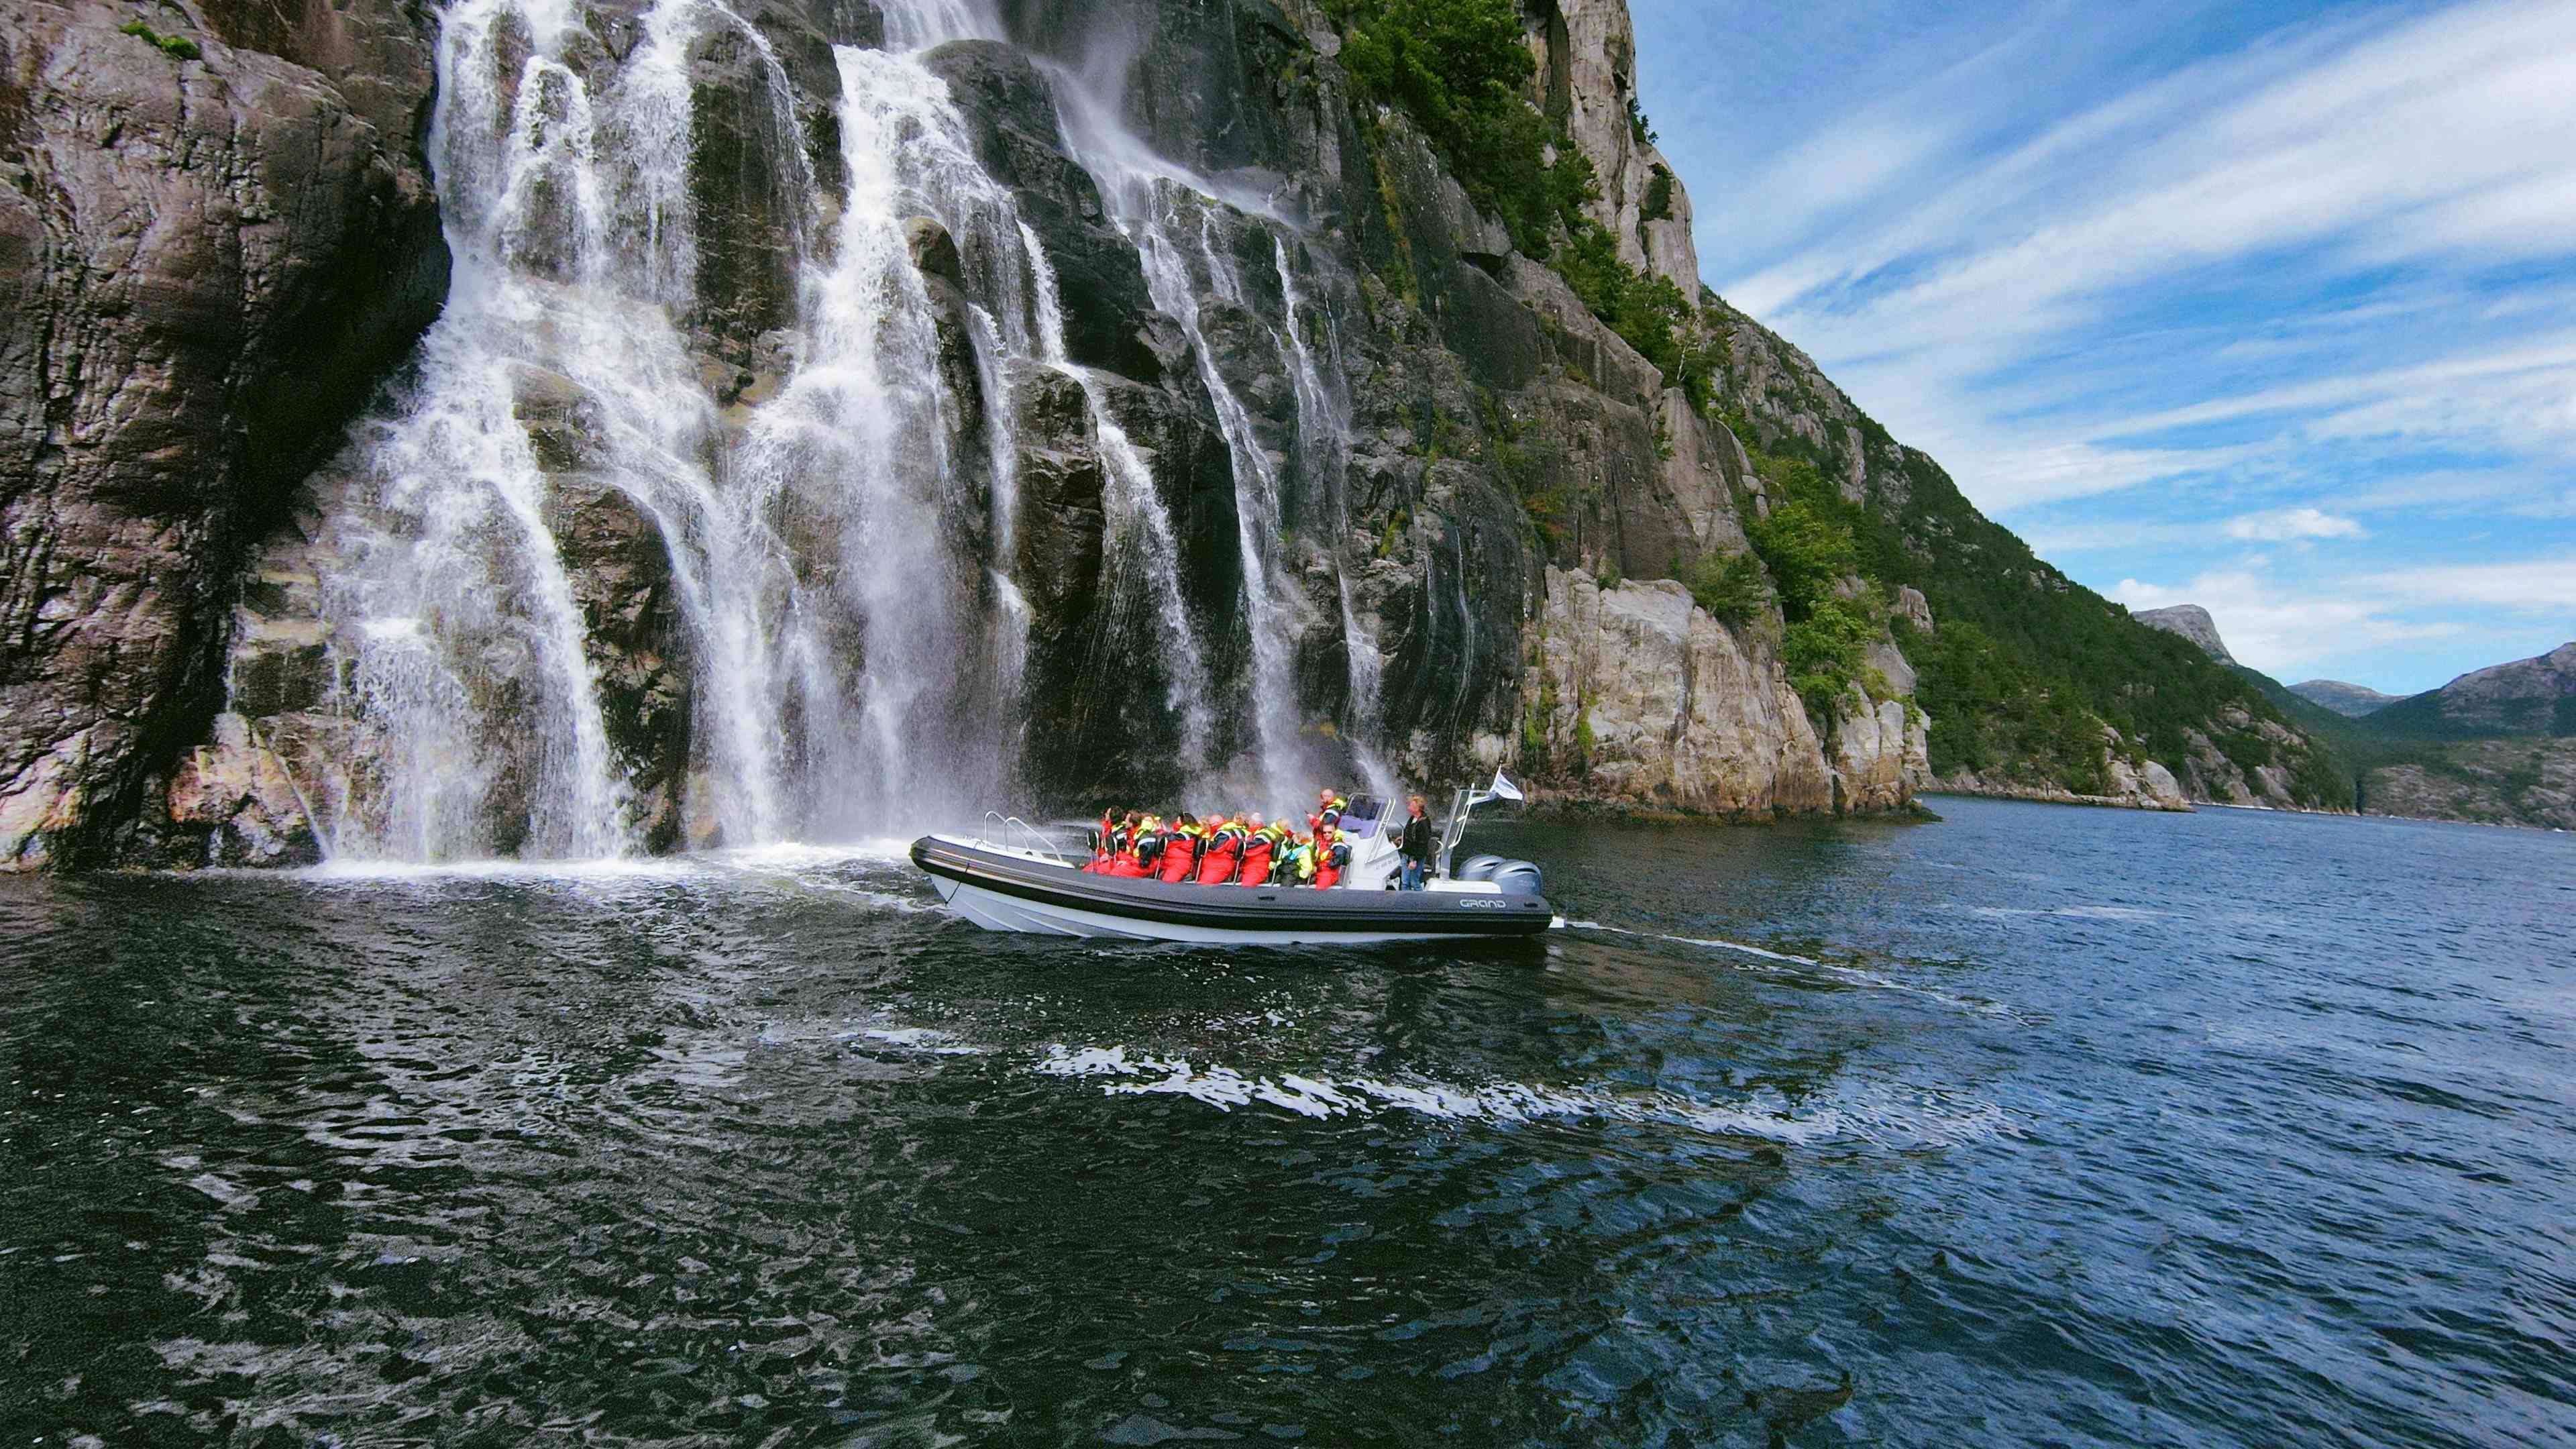 A RIB boat close to the Hengjanefossen waterfall